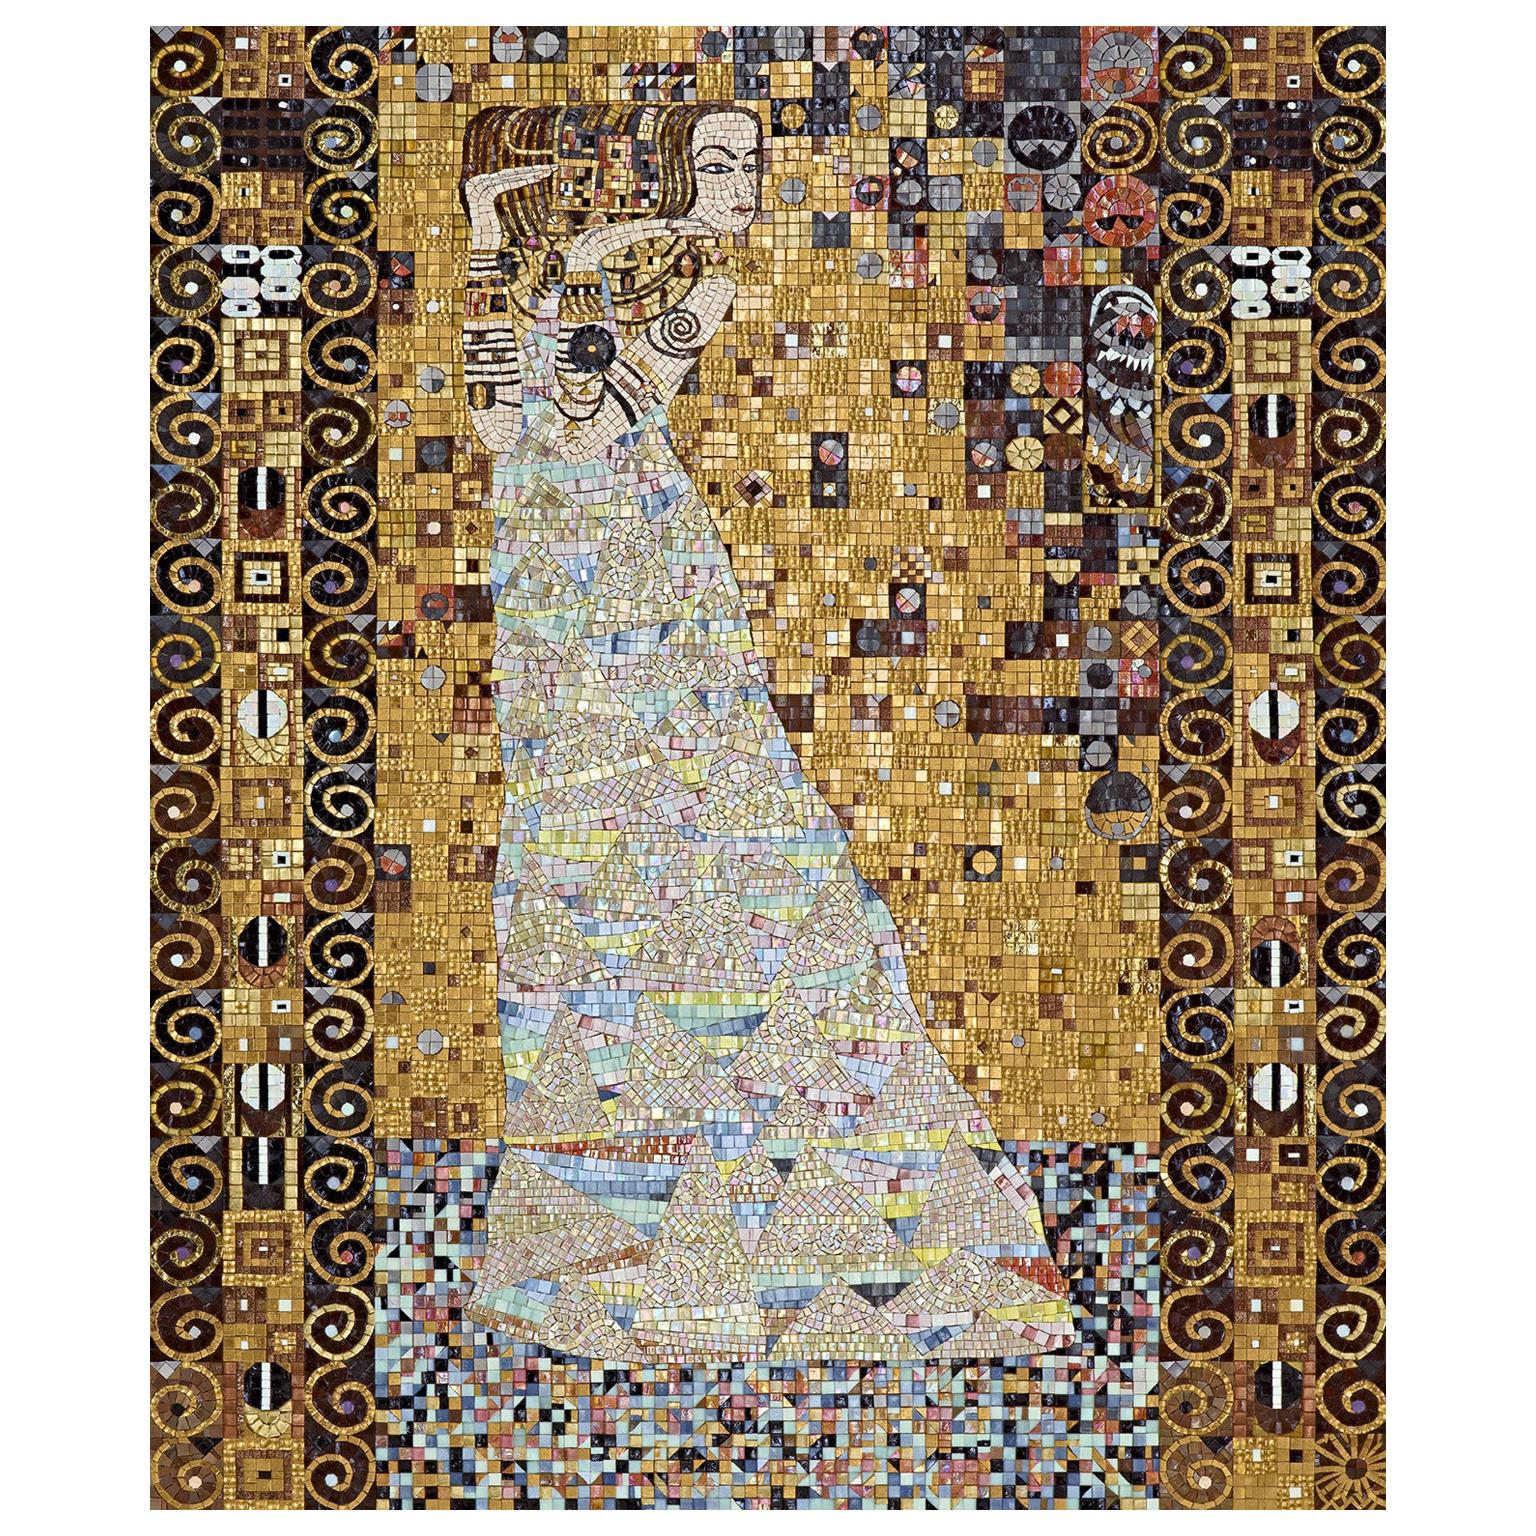 Artistic Mosaic Handmade on Aluminum Panel Gold Leaf Customizable